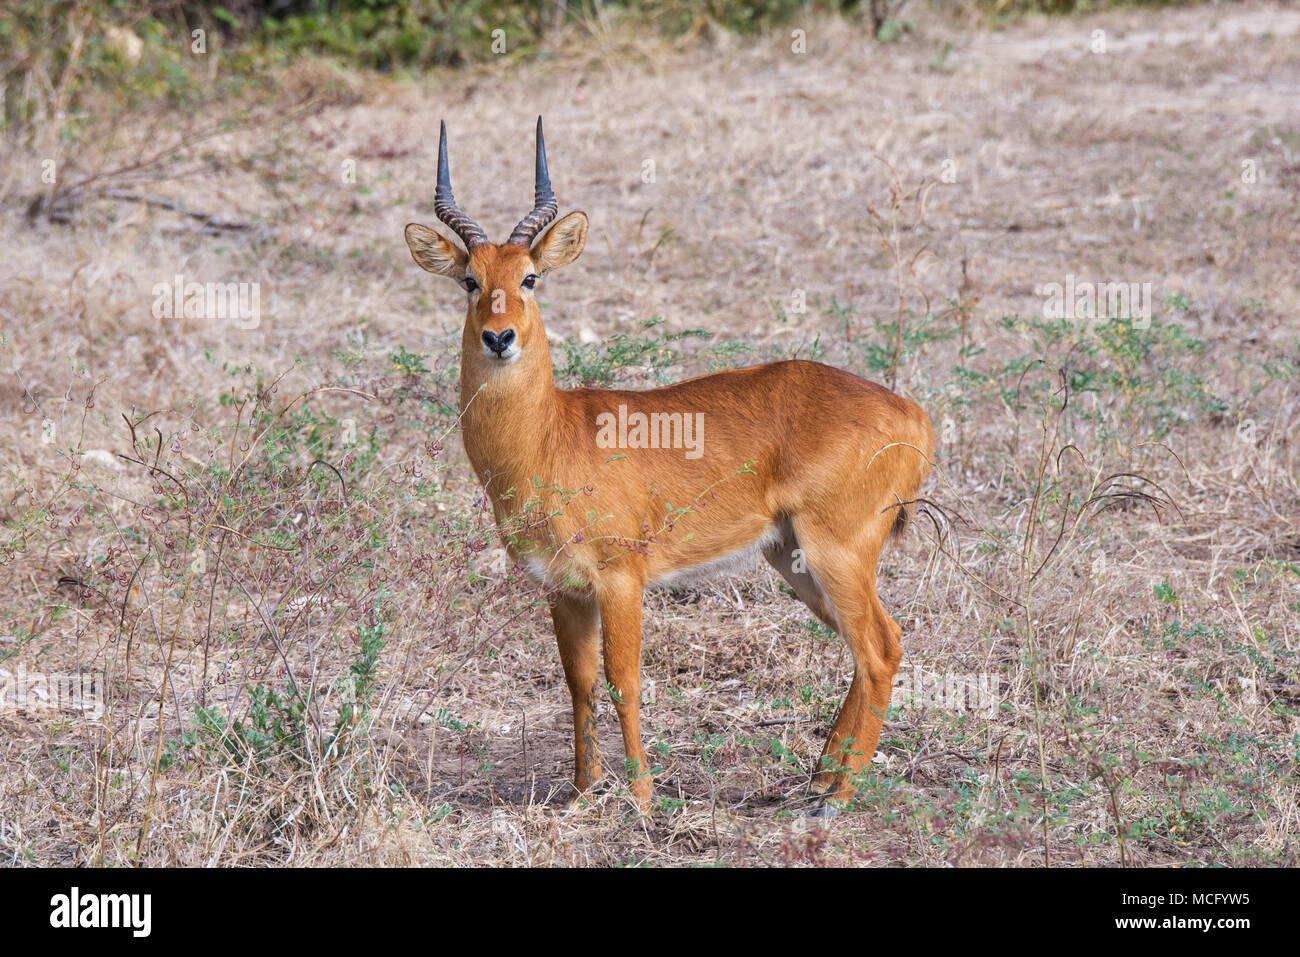 Animal puku wildlife hi-res stock photography and images - Alamy